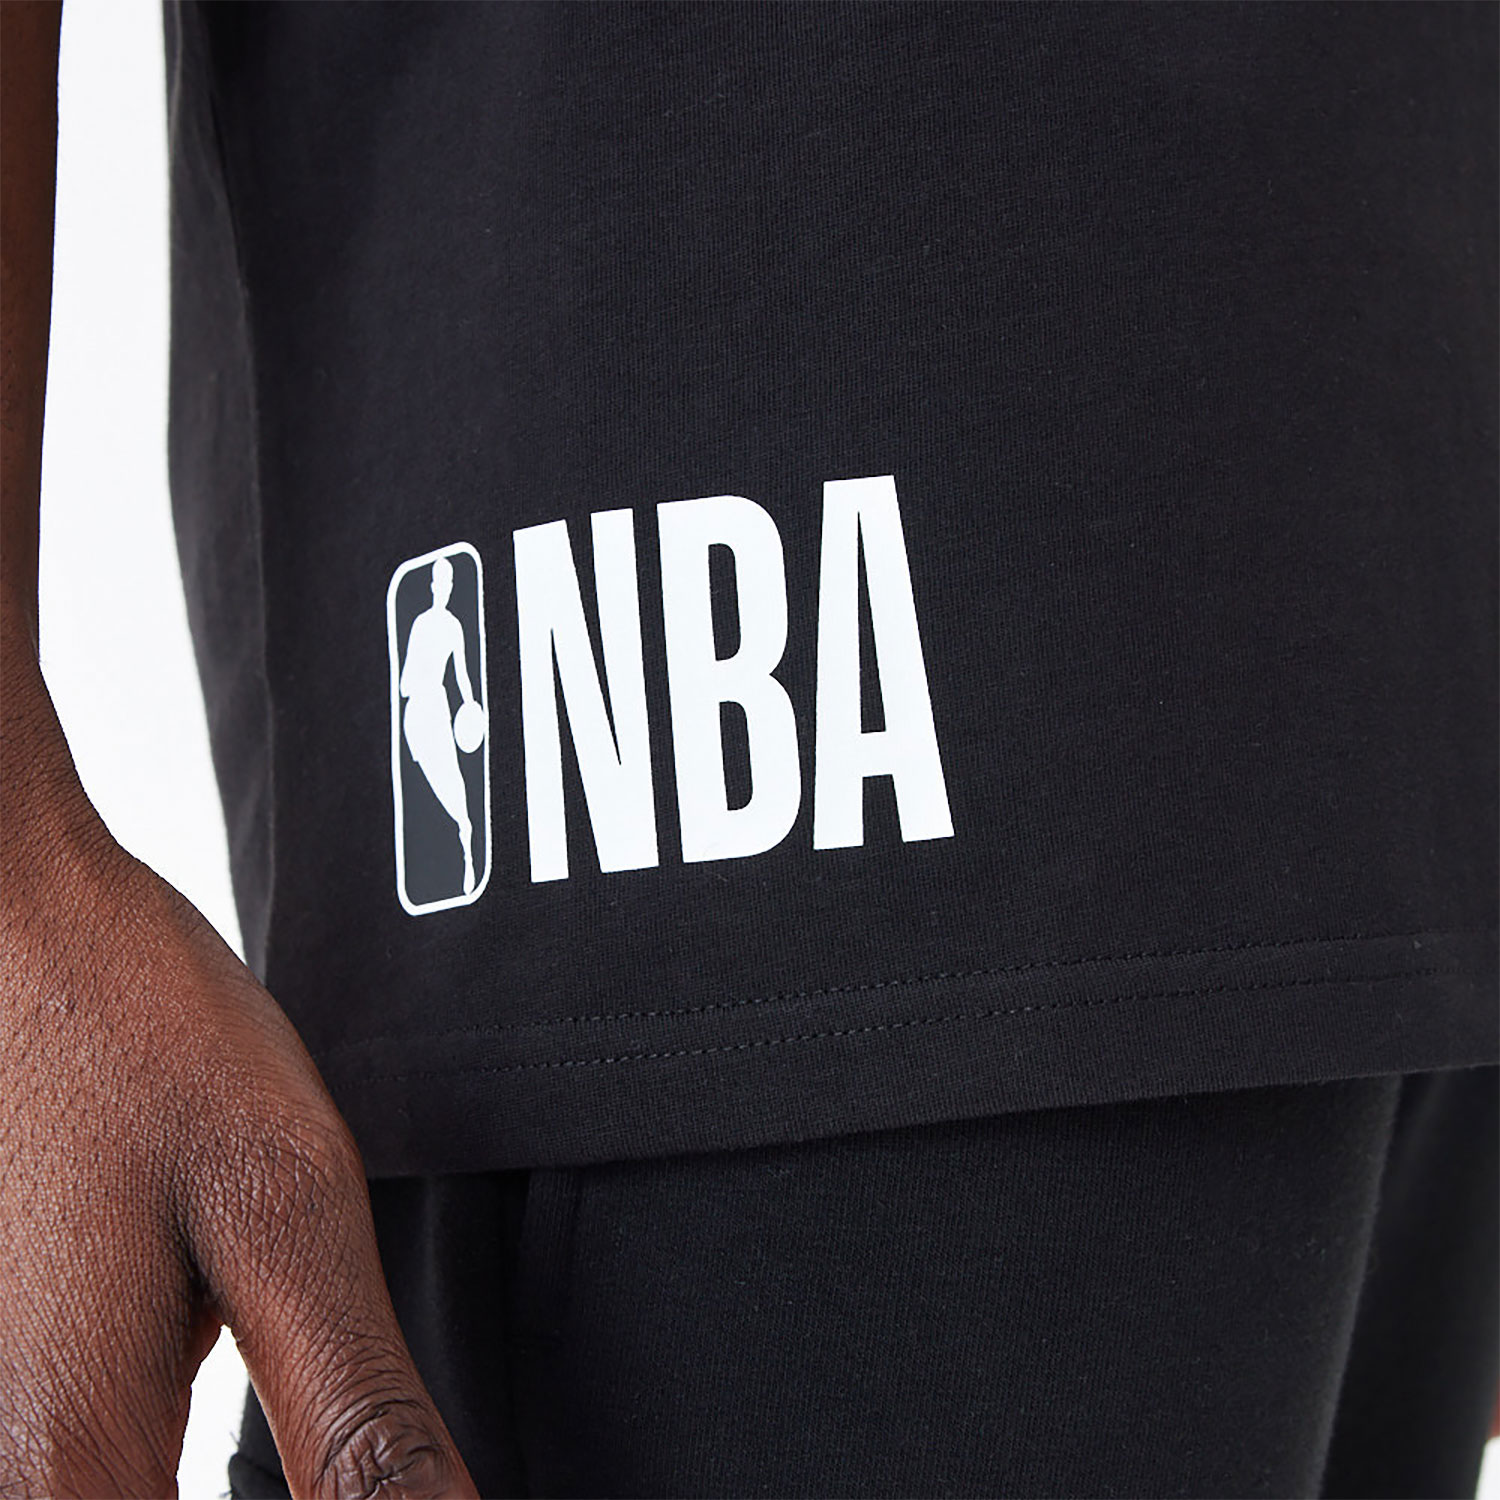 Miami Heat NBA Arch Graphic Black Oversized T-Shirt